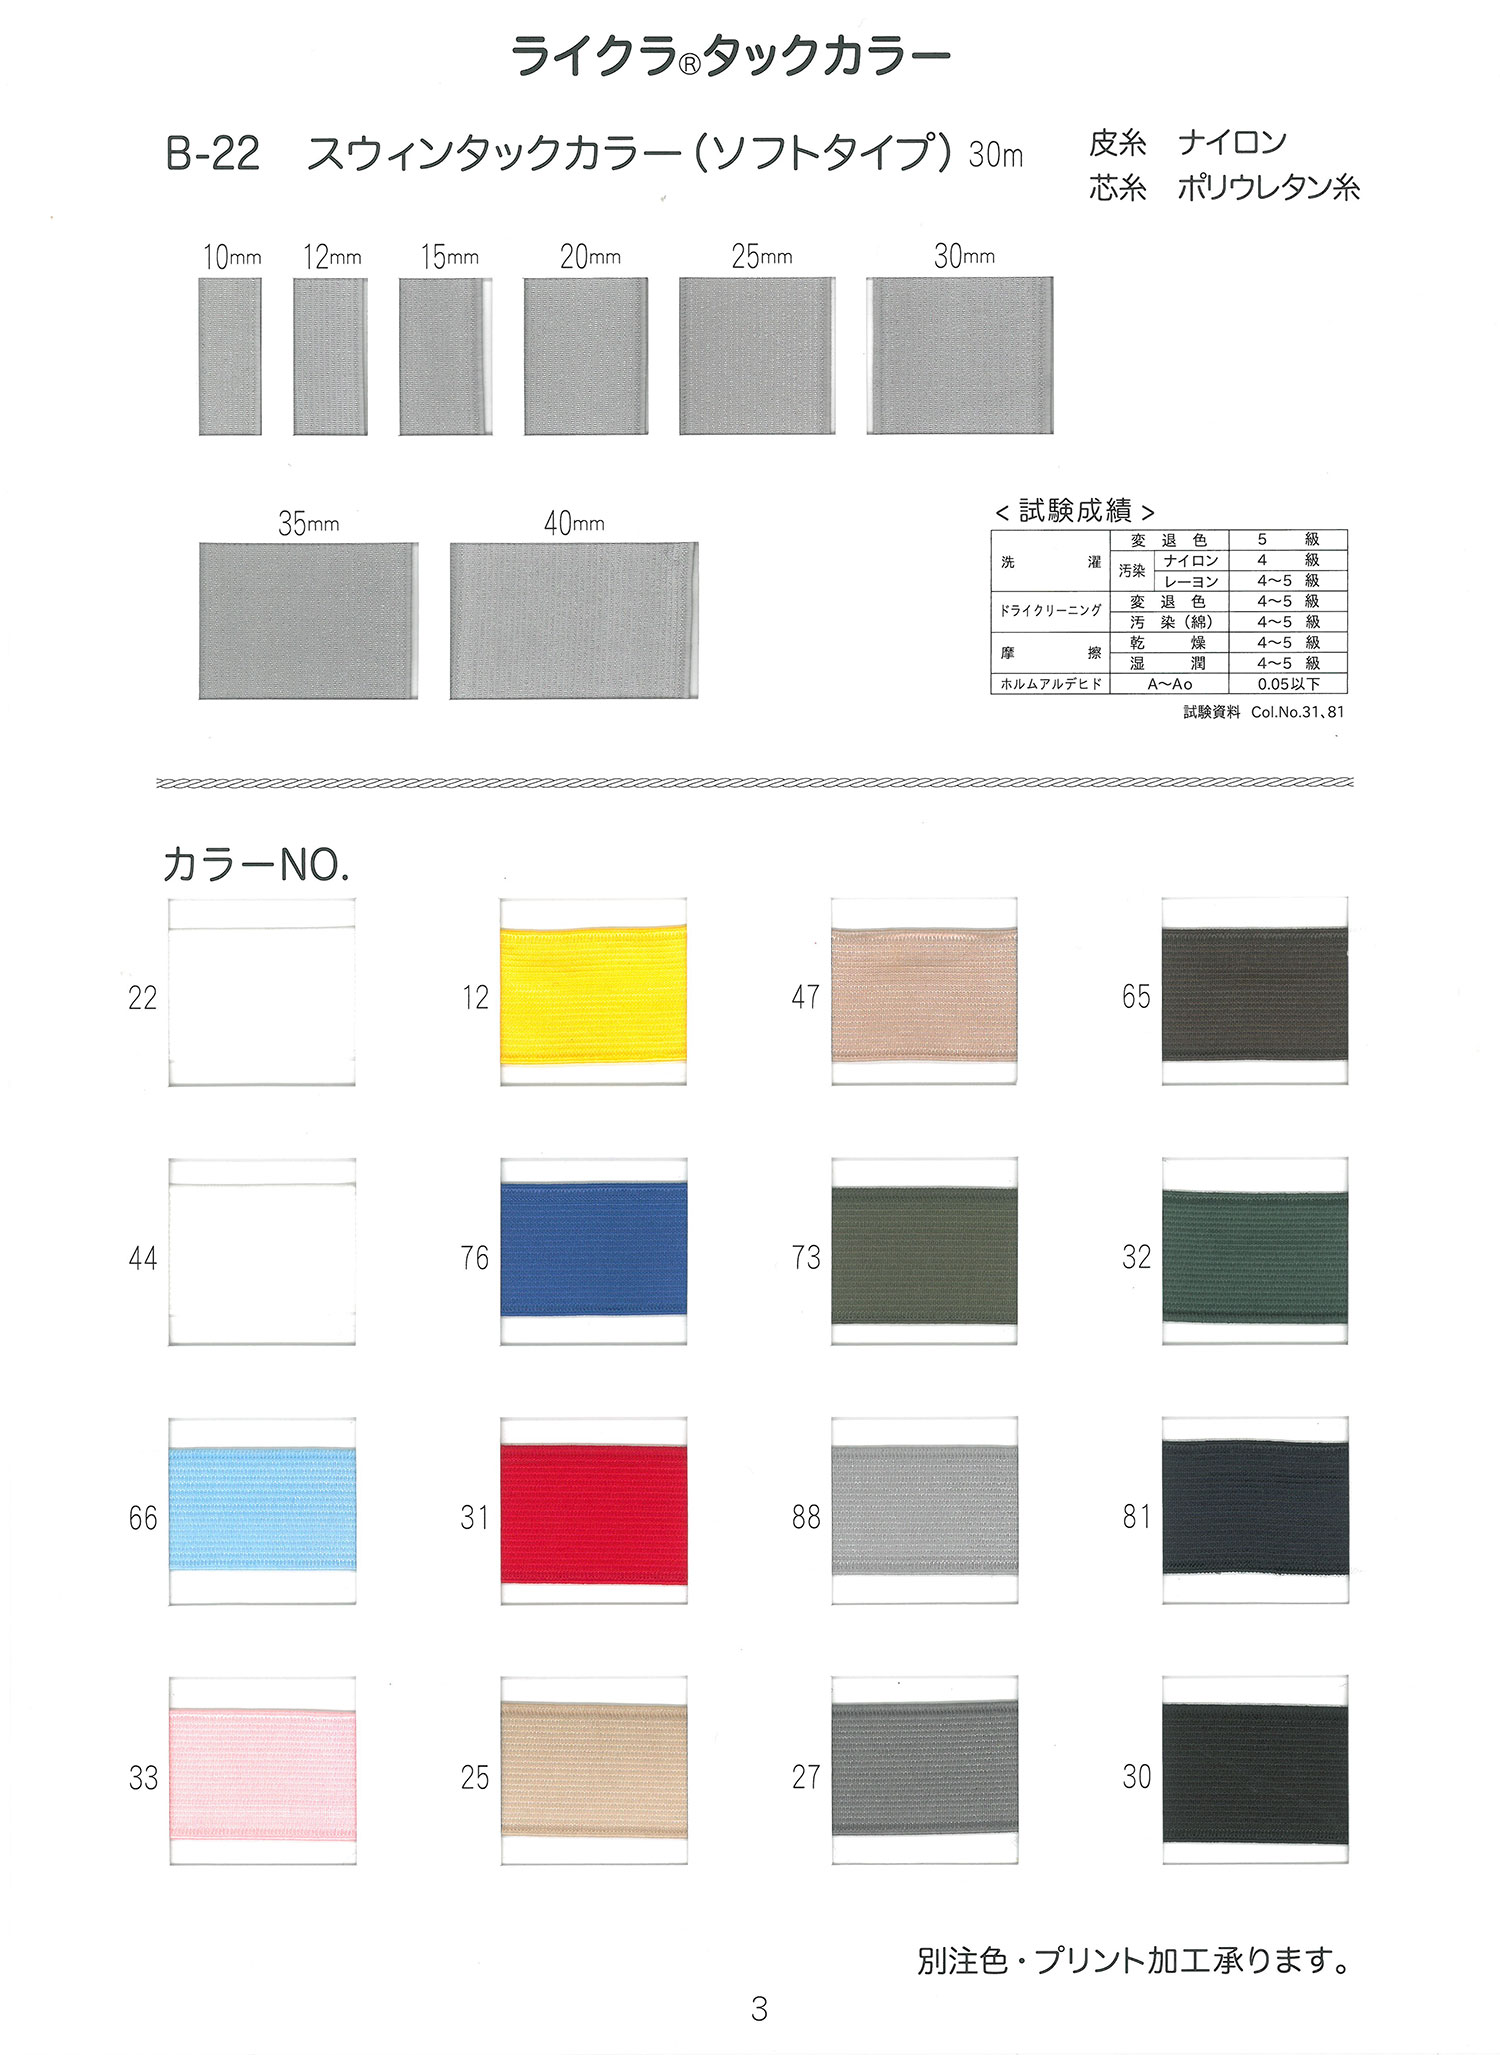 B22 Swintack-Farbe (Weicher Typ)[Gummiband] 500 ZÖPFE &amp; WEBBAND